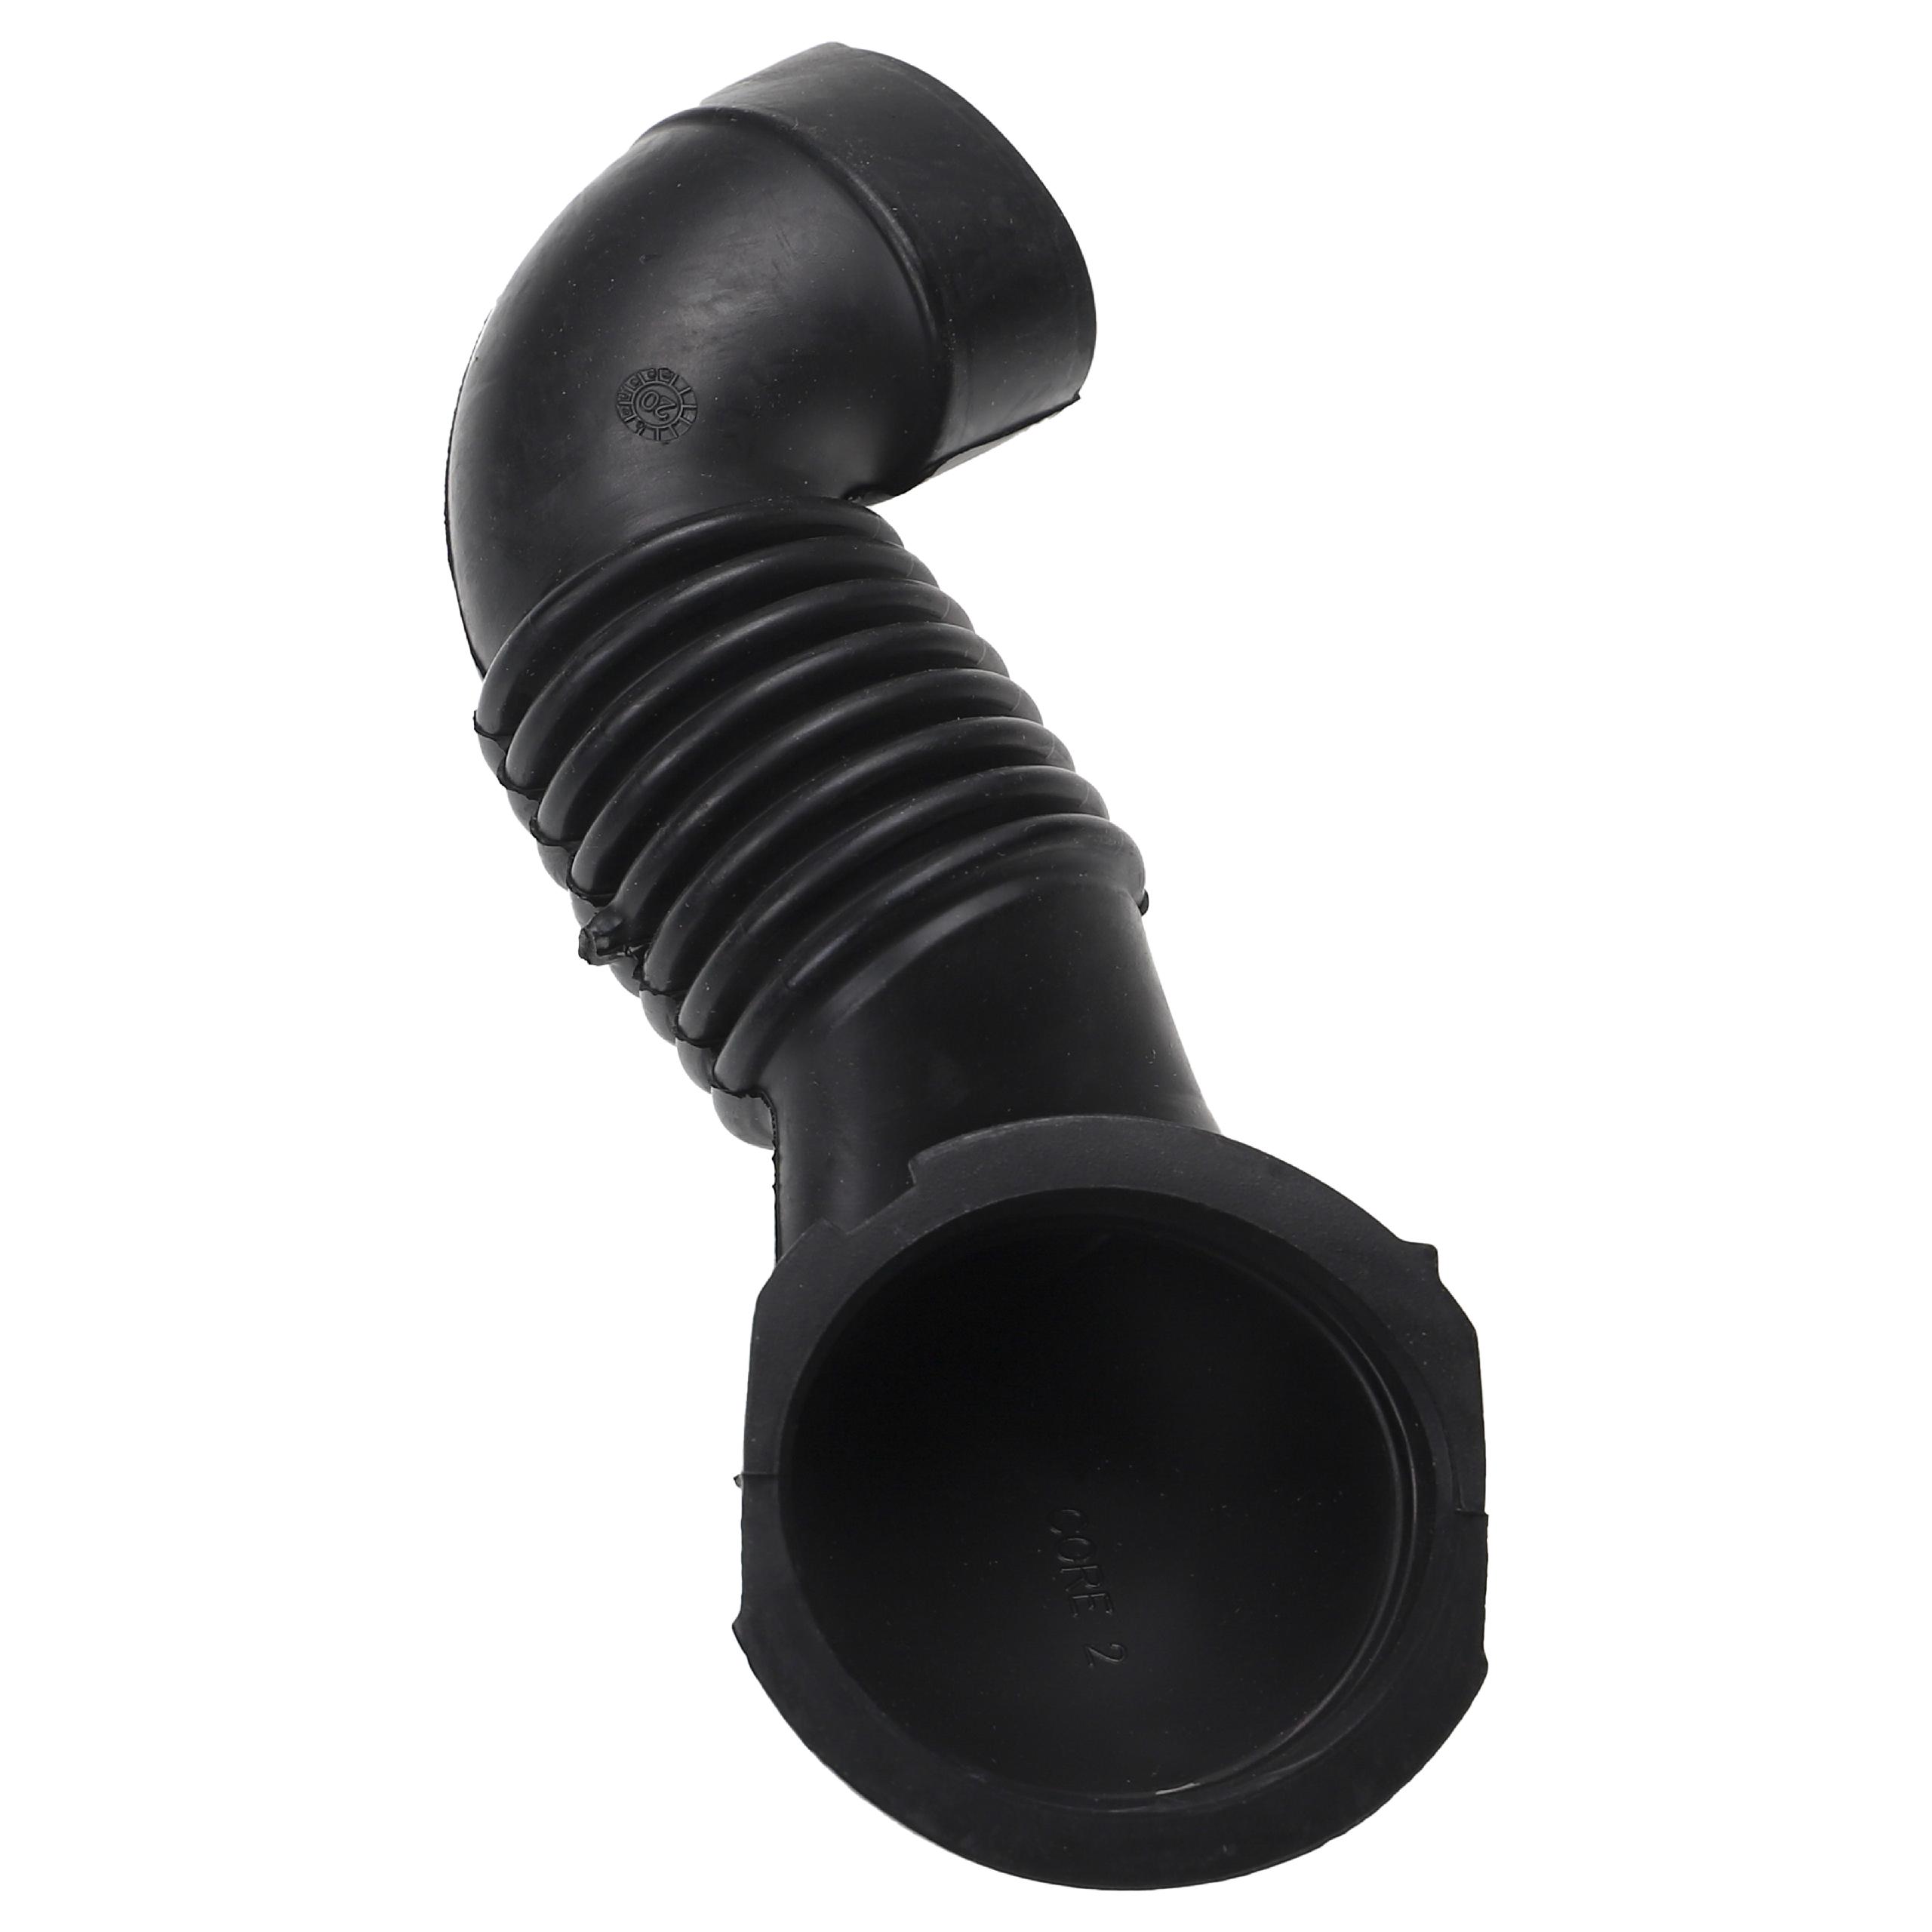 Suction Hose replaces 265958 forWashing Machine - Suction Nozzle